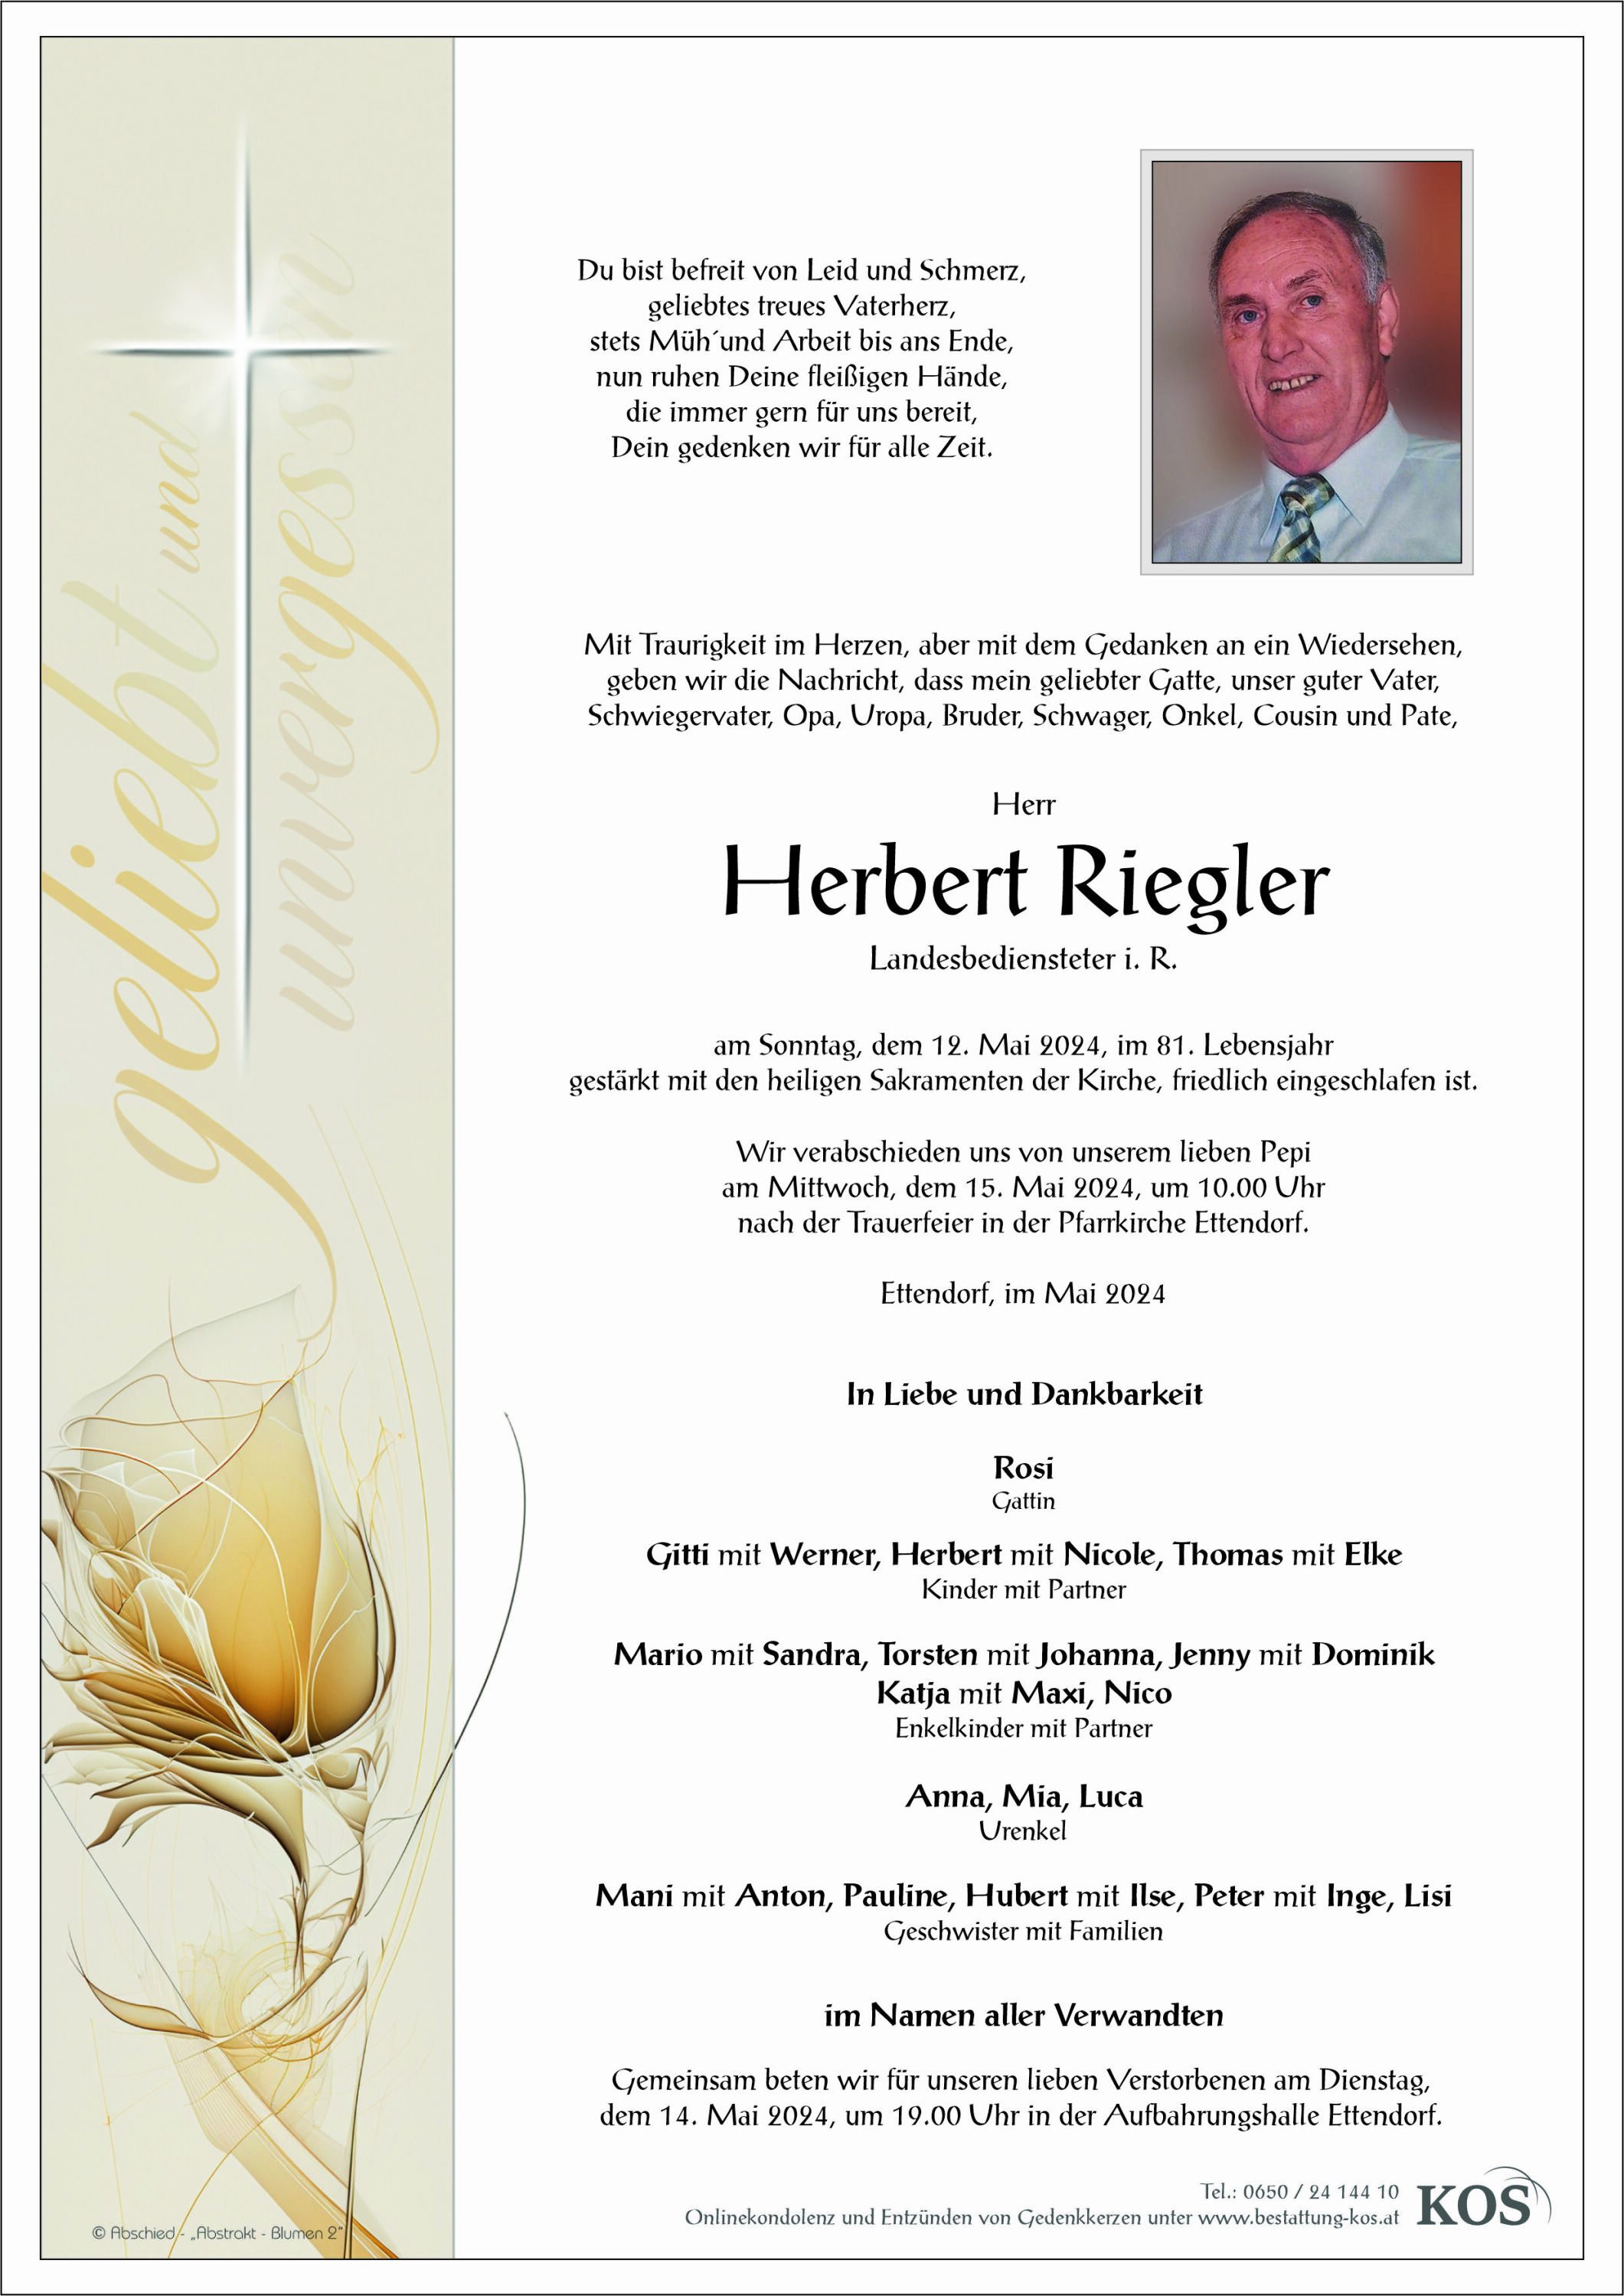 Herbert Riegler